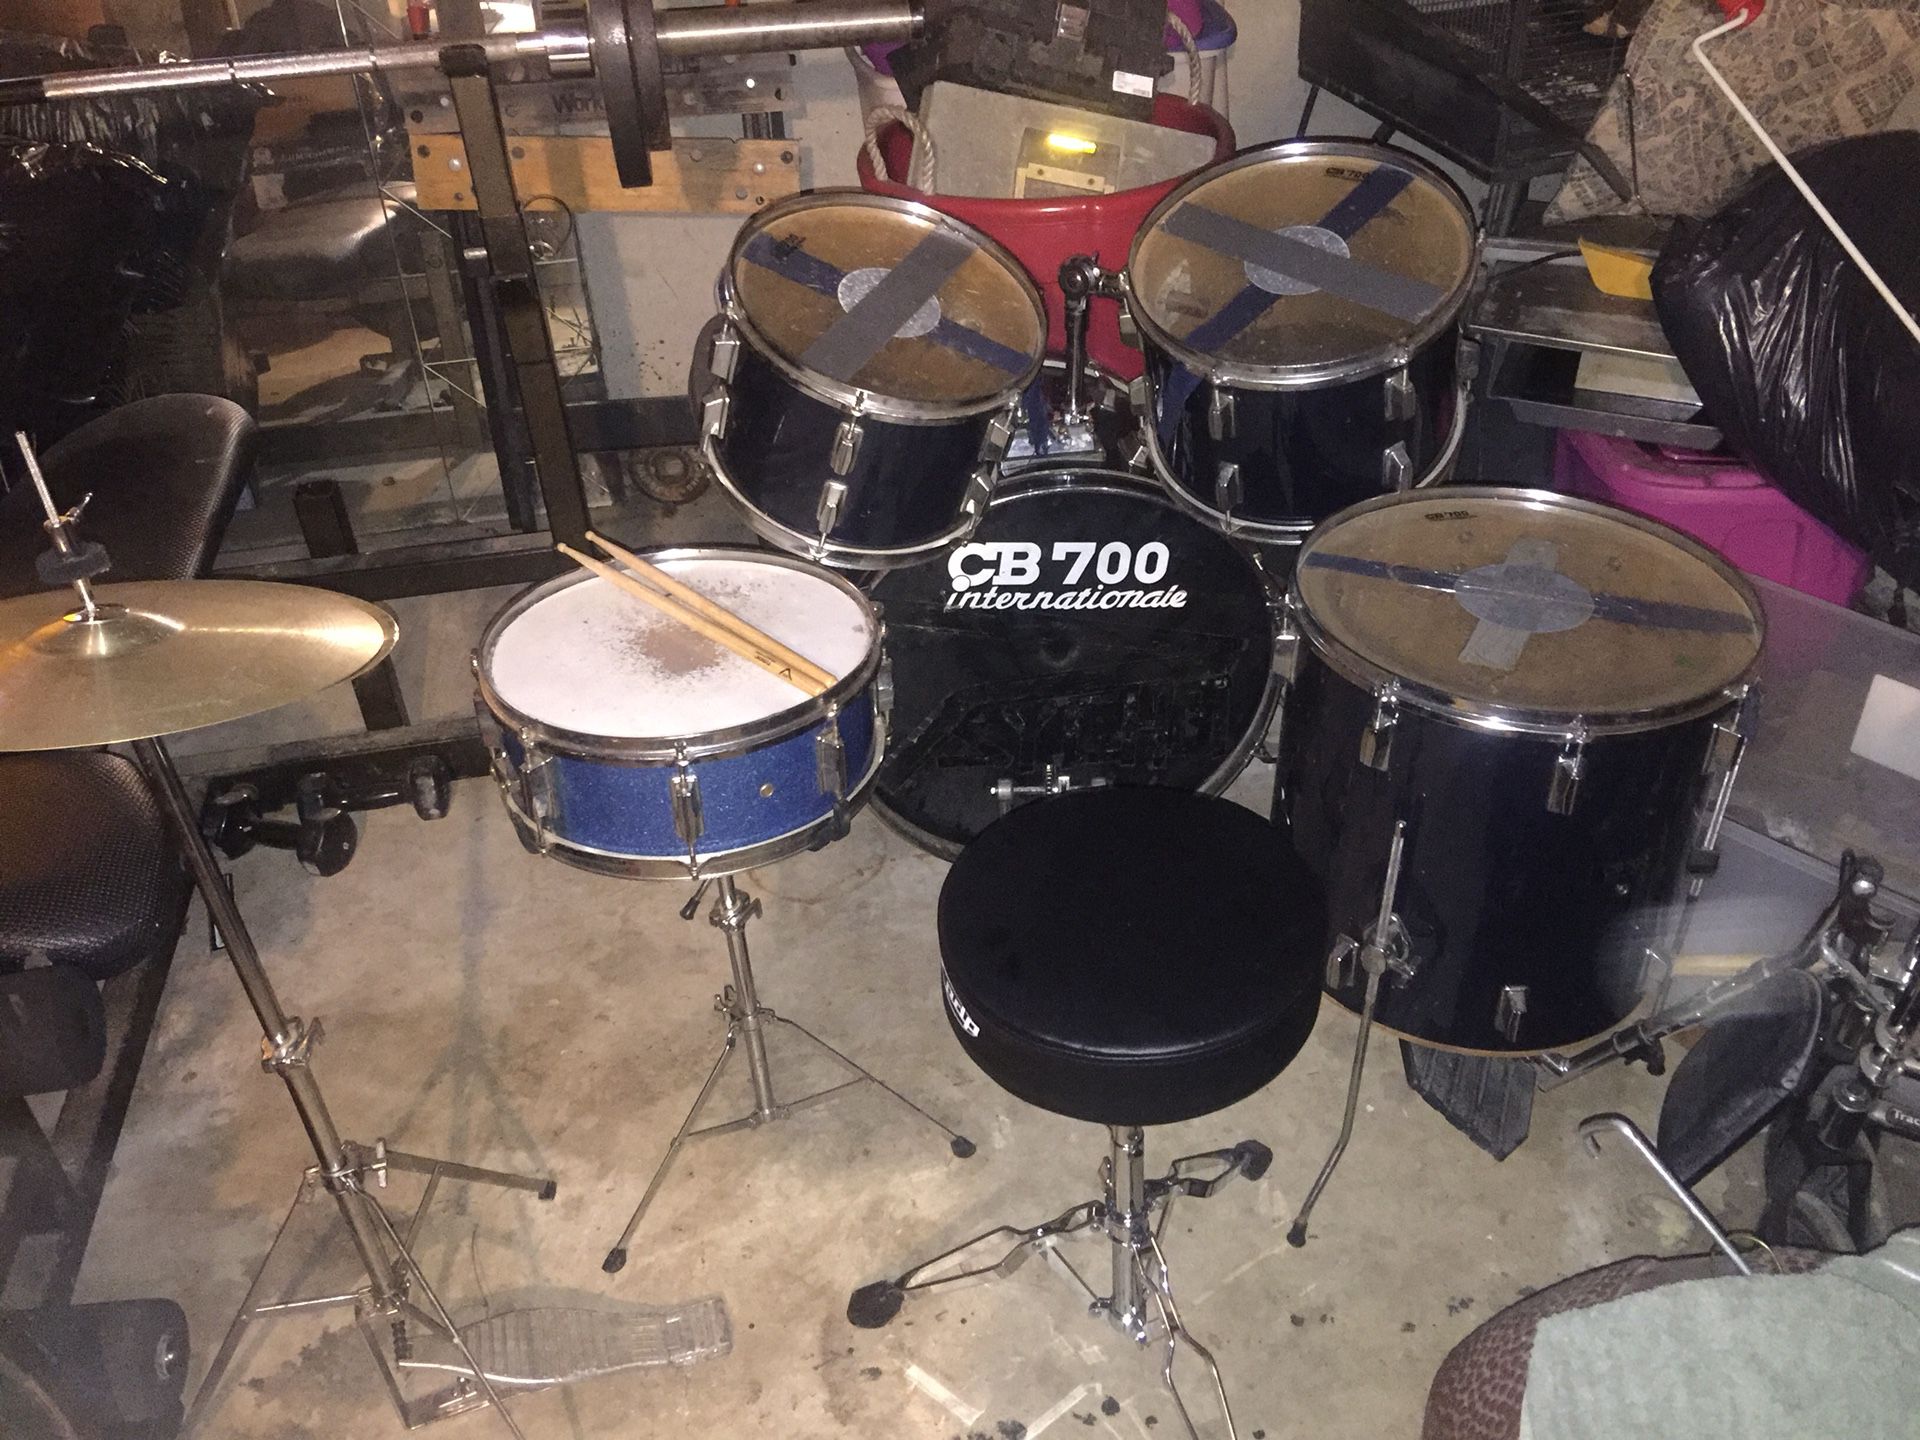 CB 700 international drum set